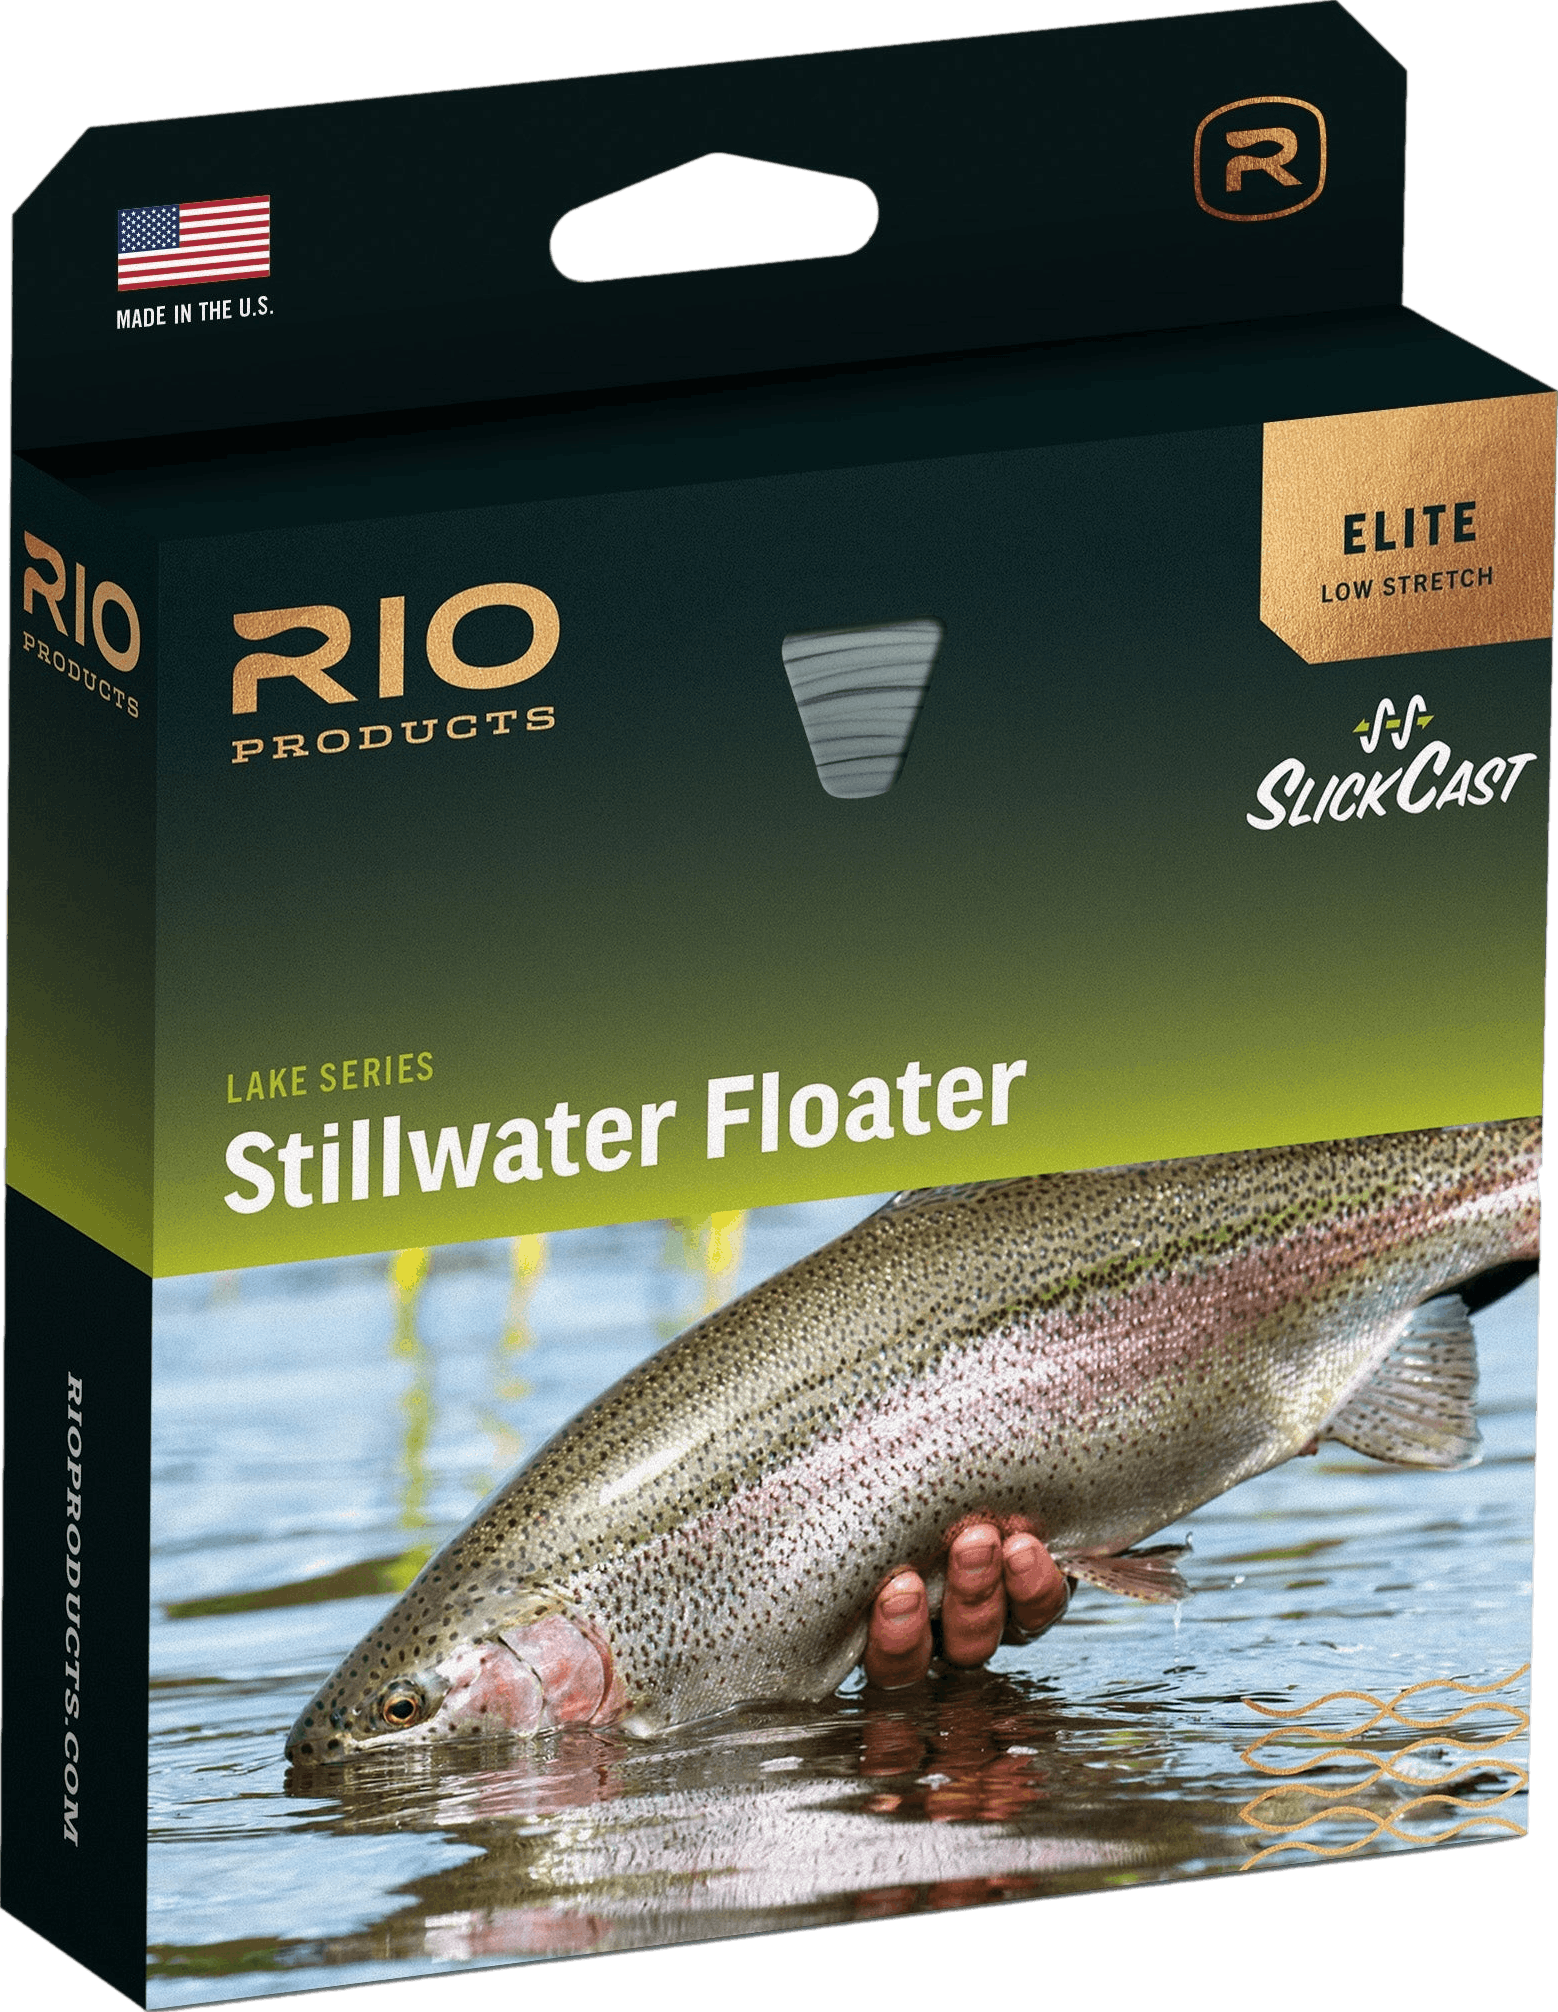 Rio Elite Stillwater Floater Fly Line